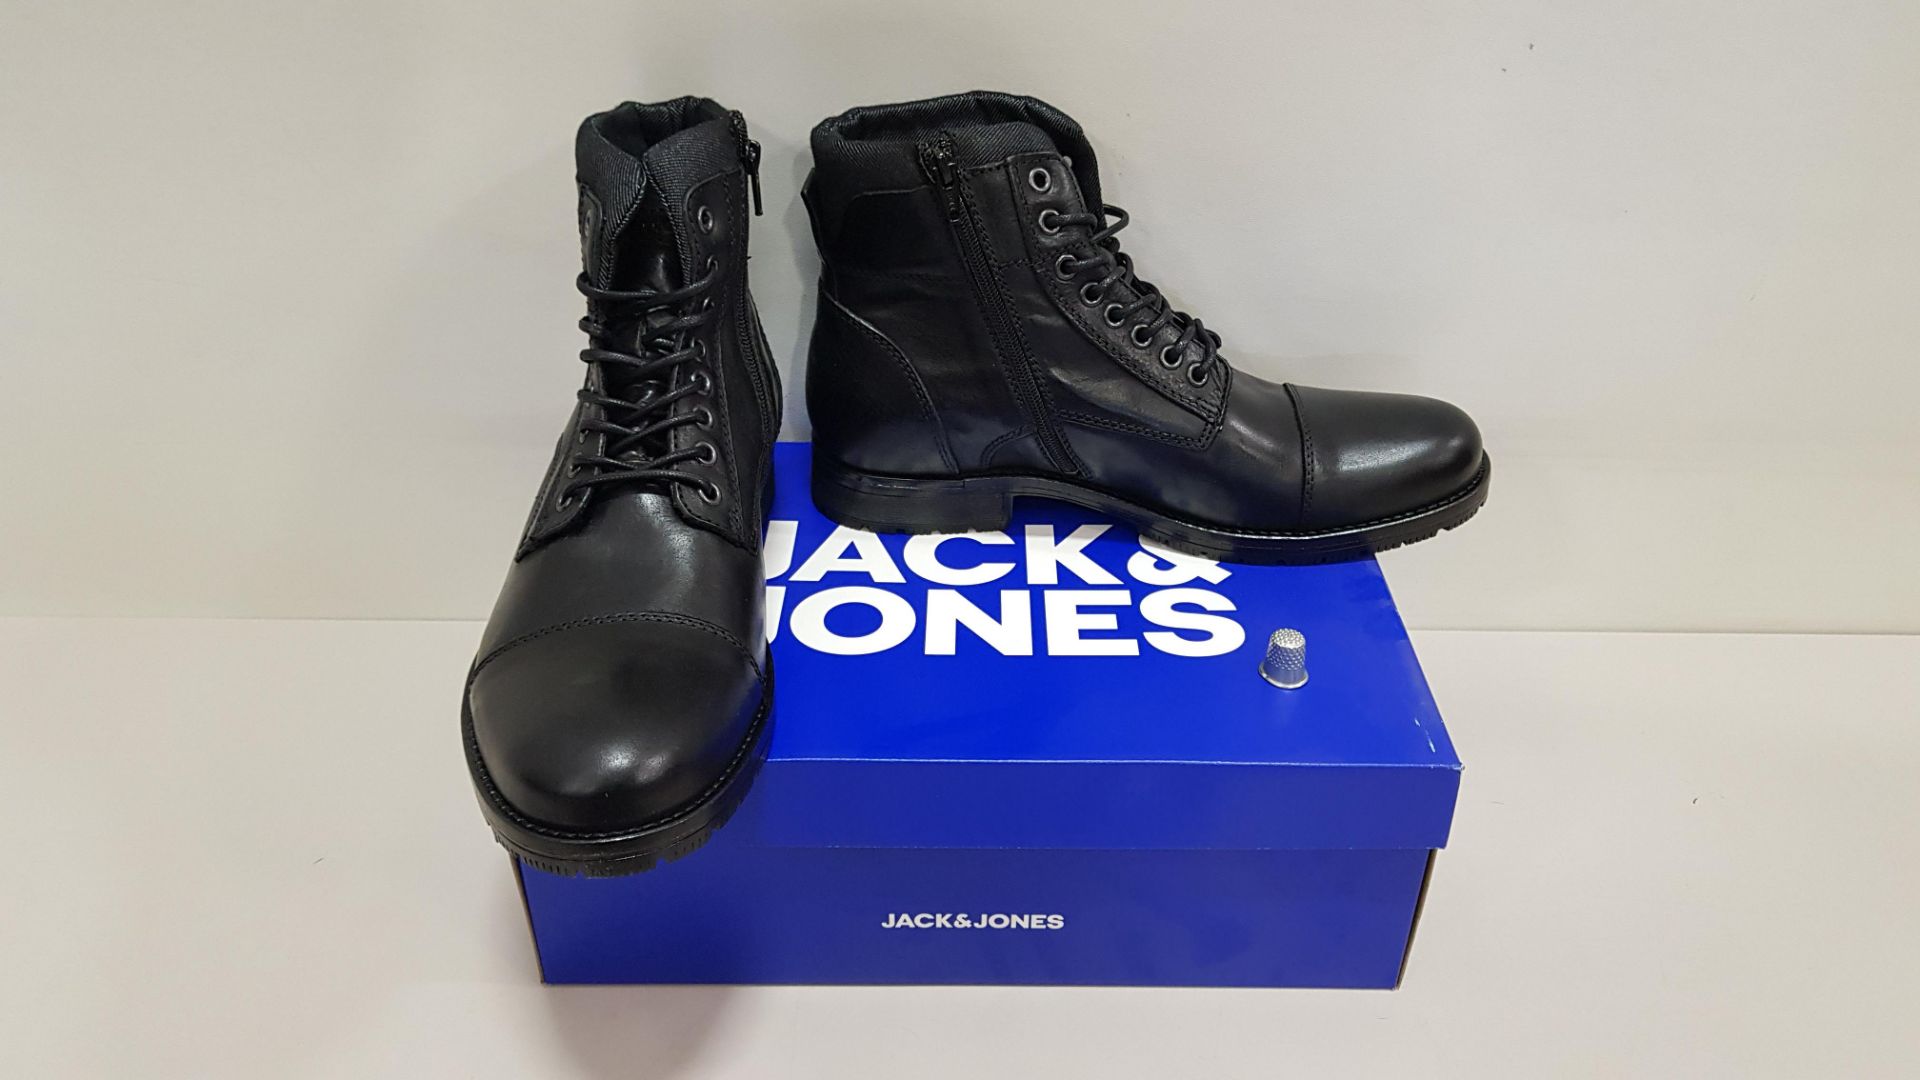 5 X BRAND NEW JACK & JONES BLACK BOOTS UK SIZE 8 RRP £90.00 (TOTAL RRP £450.00)